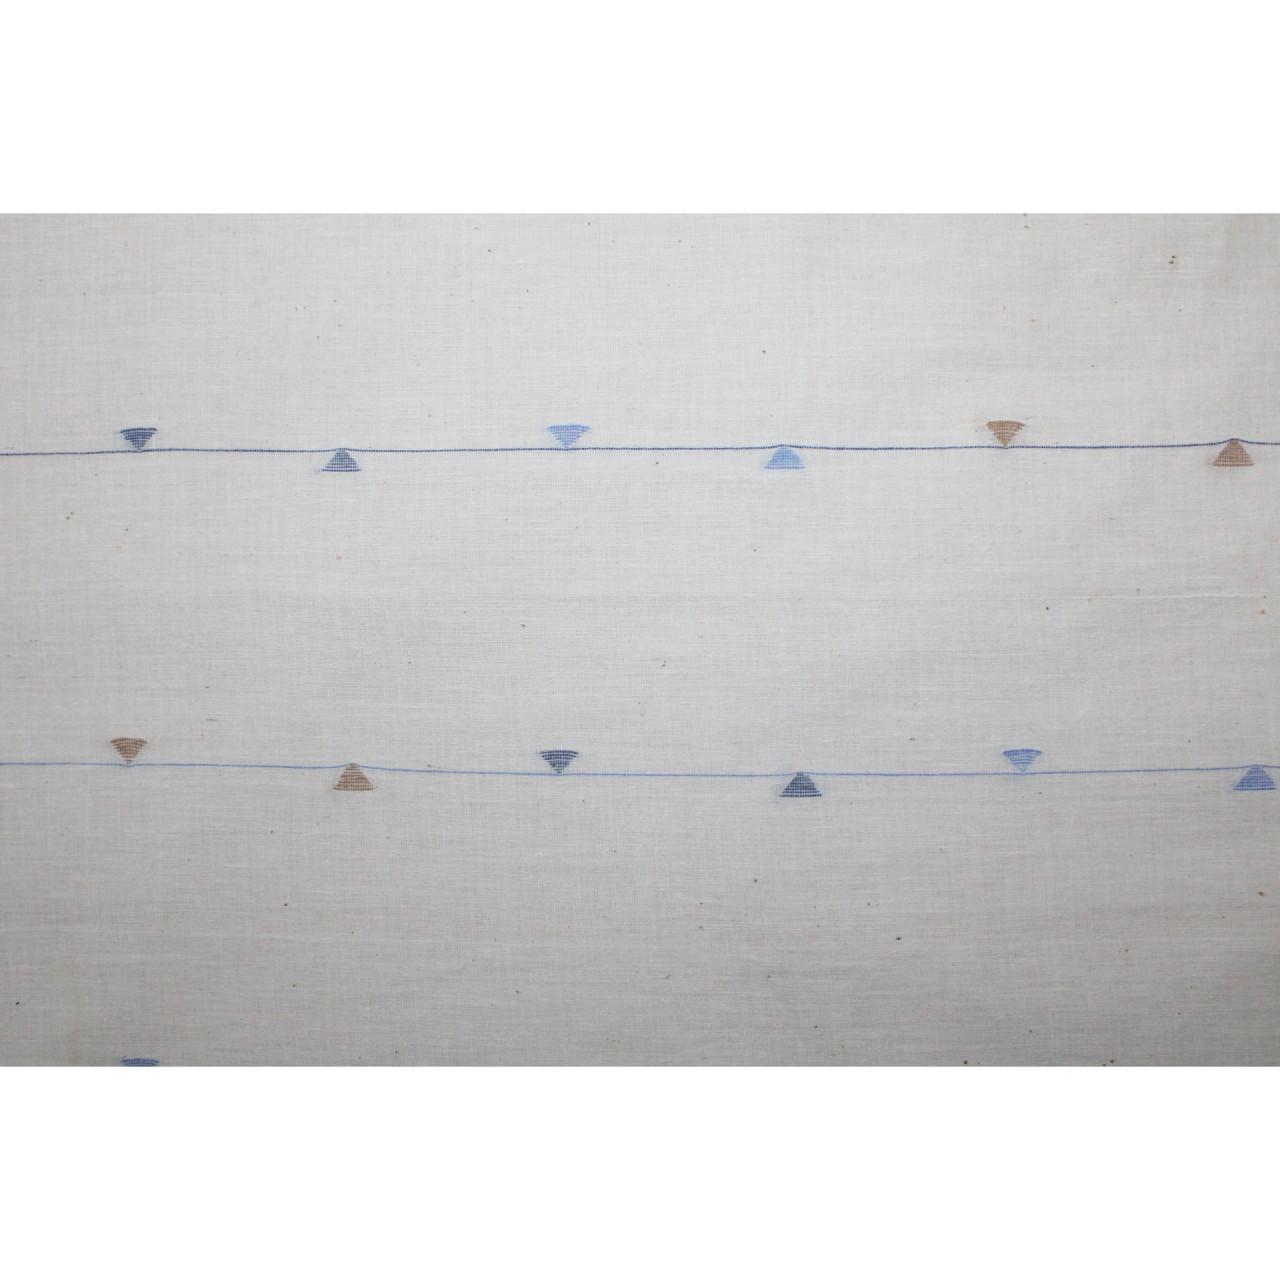 (1548) Cotton and khadi  Azo-free dyed Jamdani yardage from Shantipur with cotton motifs and cotton motifs - White, sky blue, indigo, selvedge, brown, motif